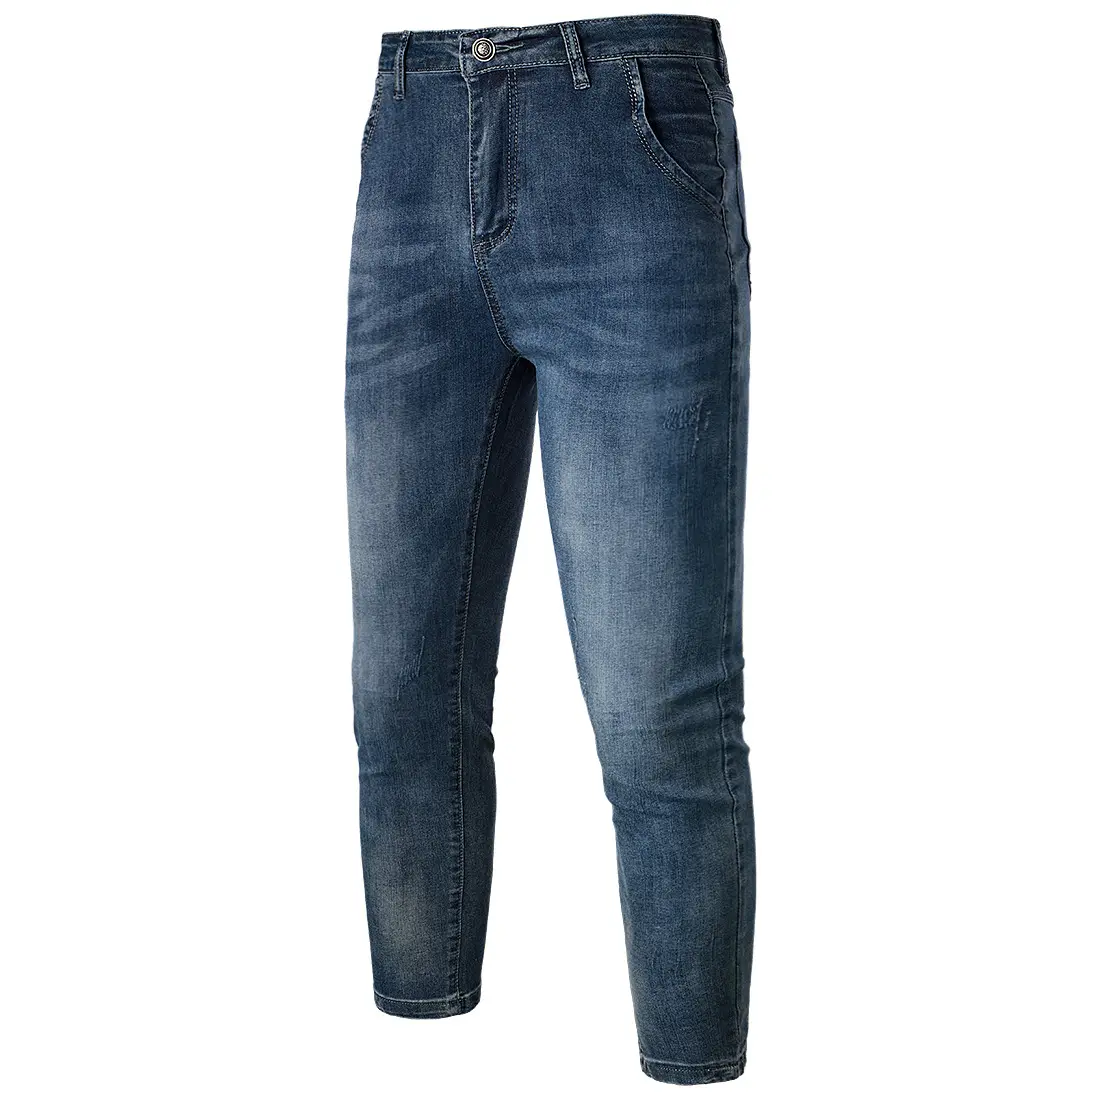 BLD streetwear Stock Trousers Winter Straight Jeans Men's Stretch Denim Jeans High Elastic Slim Pants Business casual pants